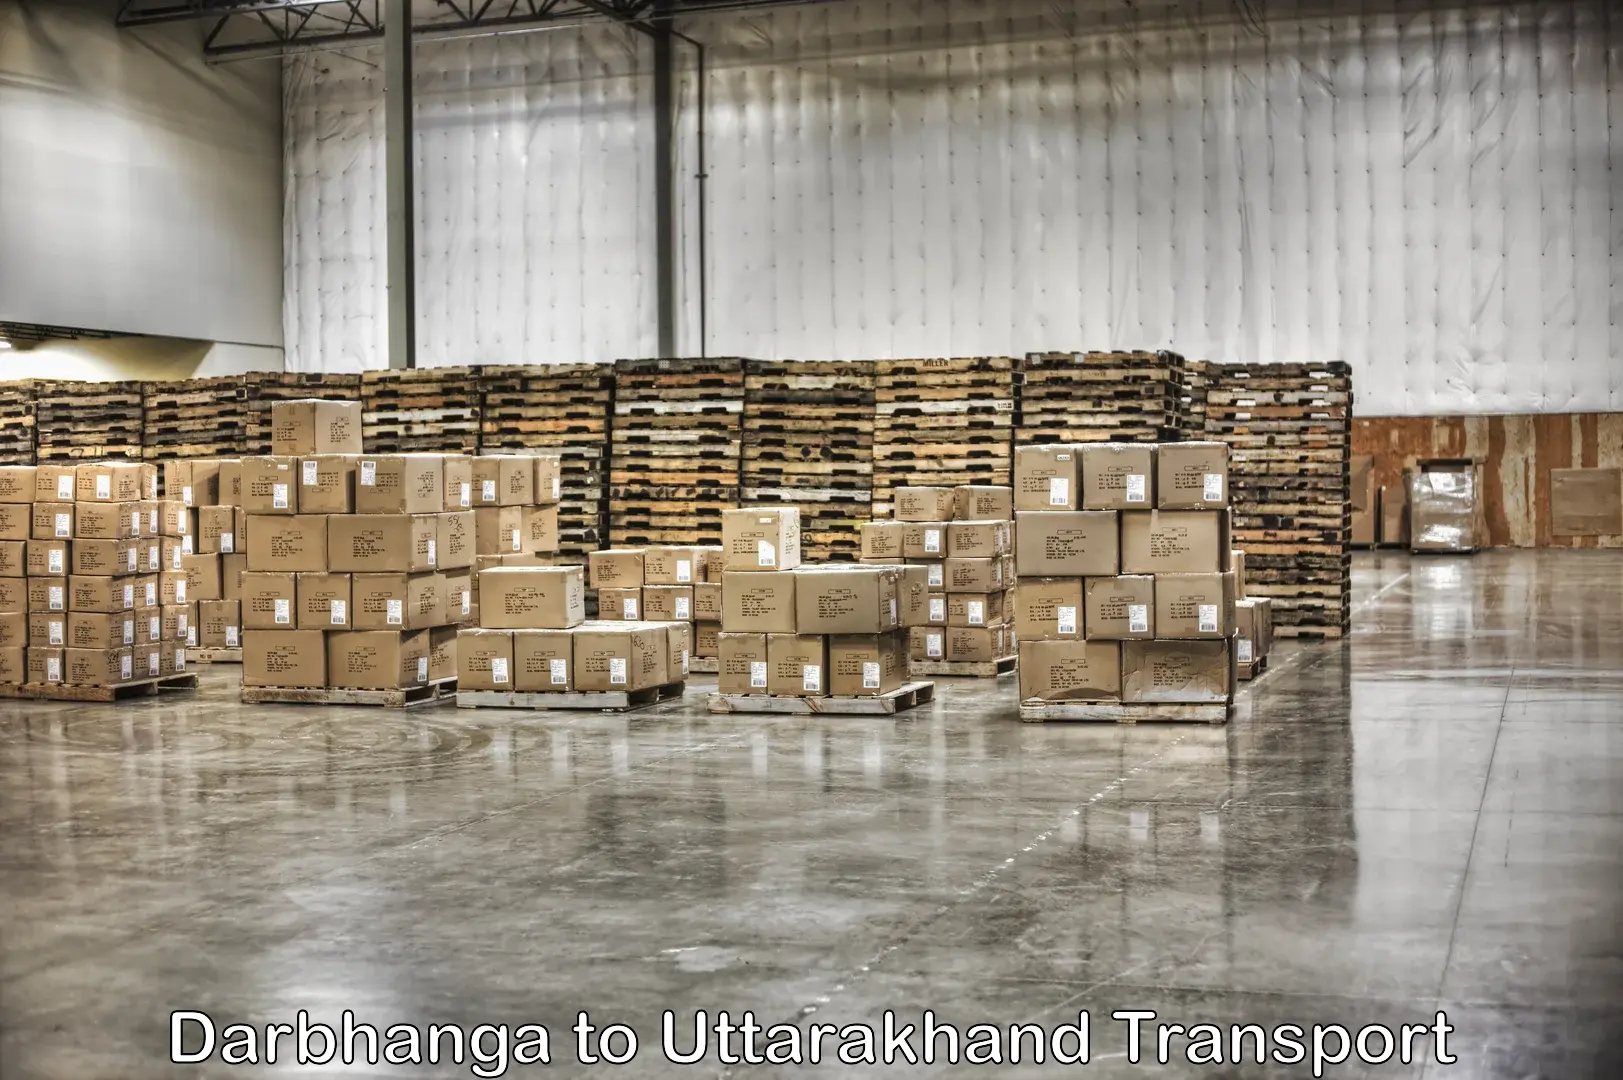 Truck transport companies in India Darbhanga to Tehri